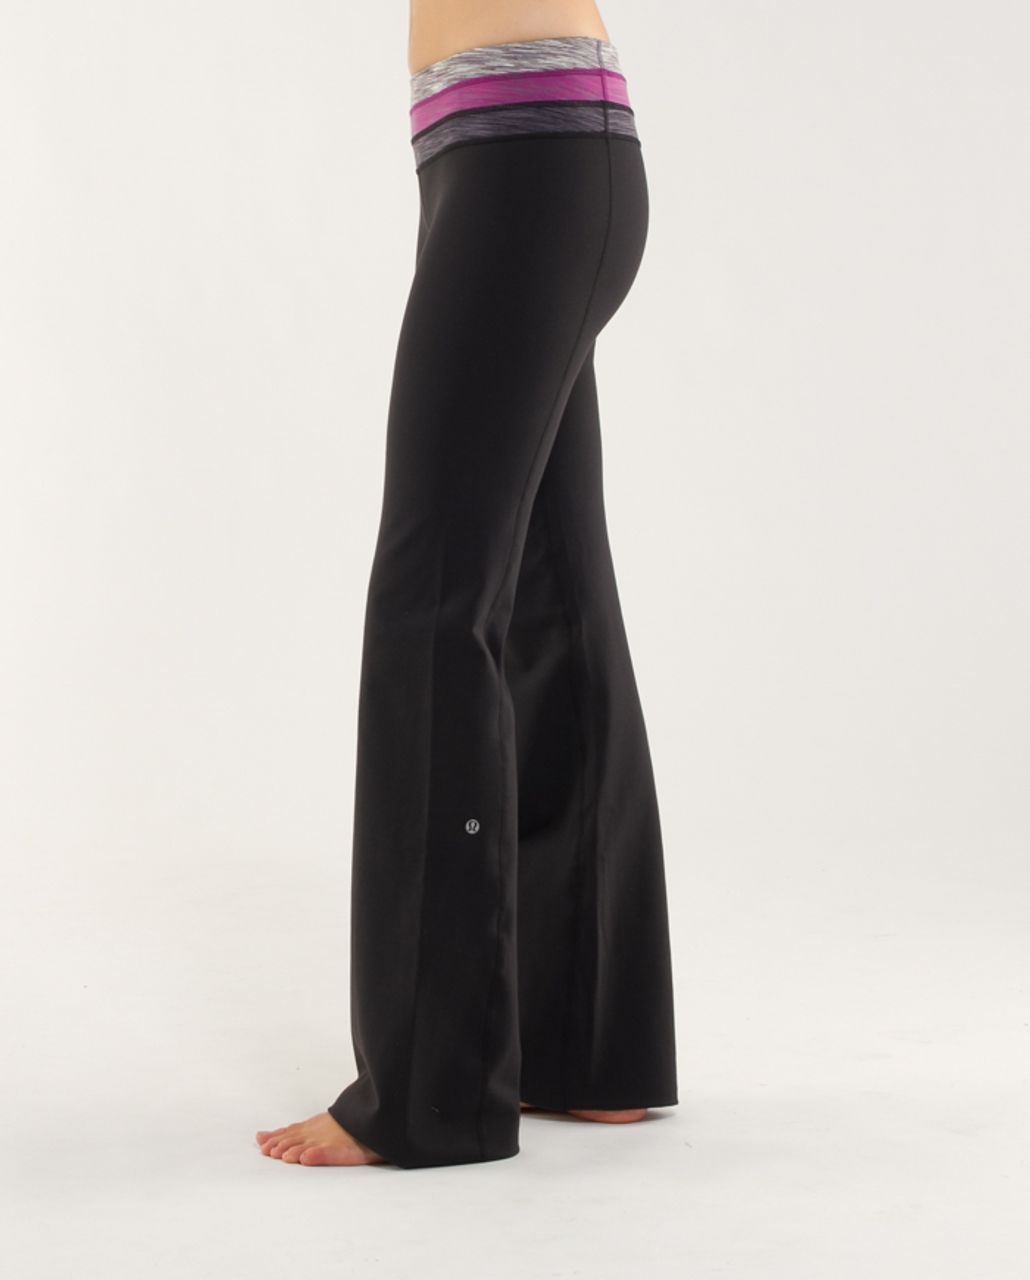 Lululemon Joggers Adult 8 Black Groove Pant Nulu Align Fabric Yoga w5deos  Womens